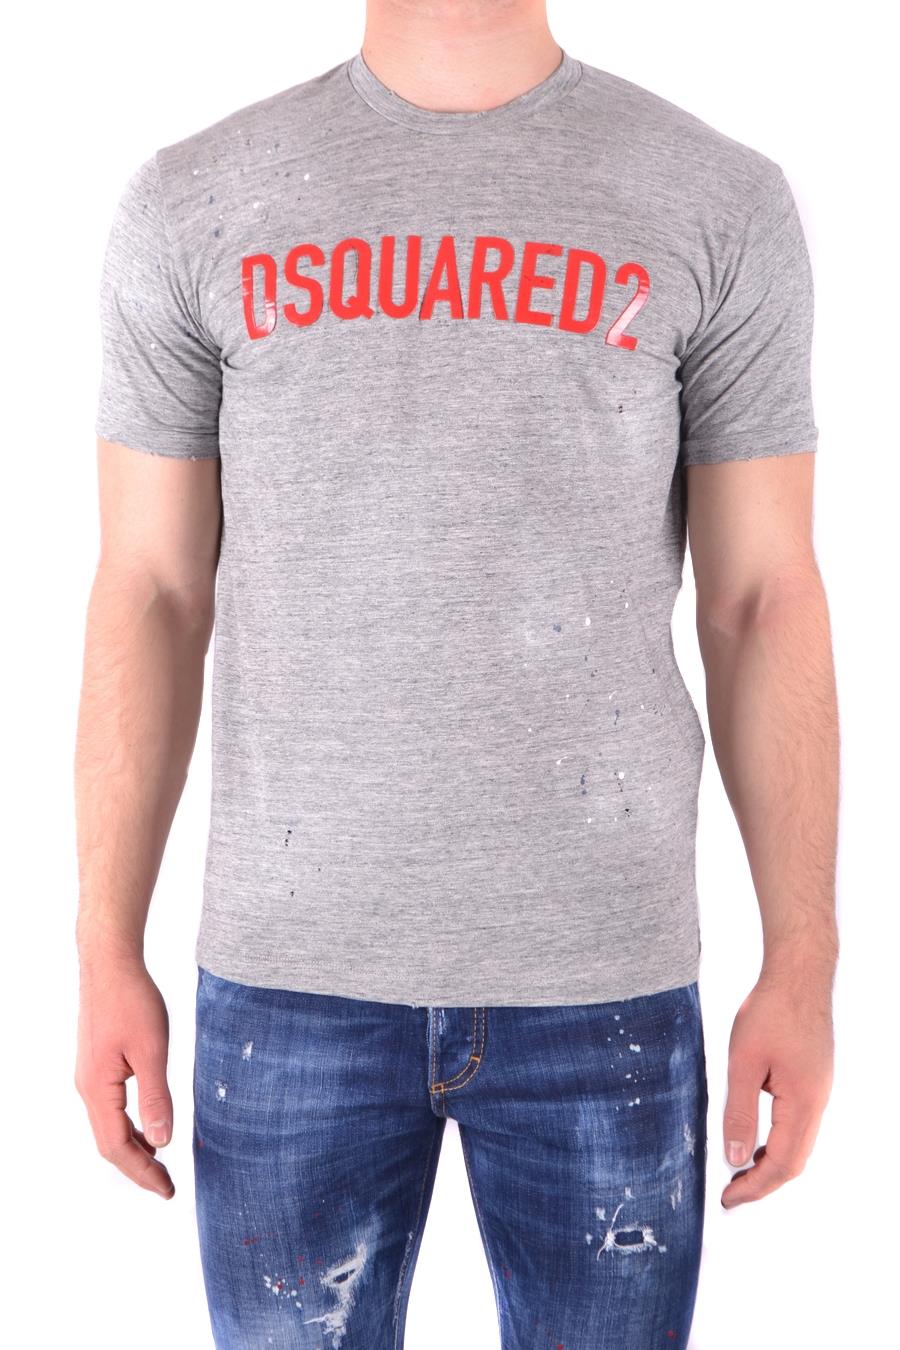 dsquared2 t shirt grey